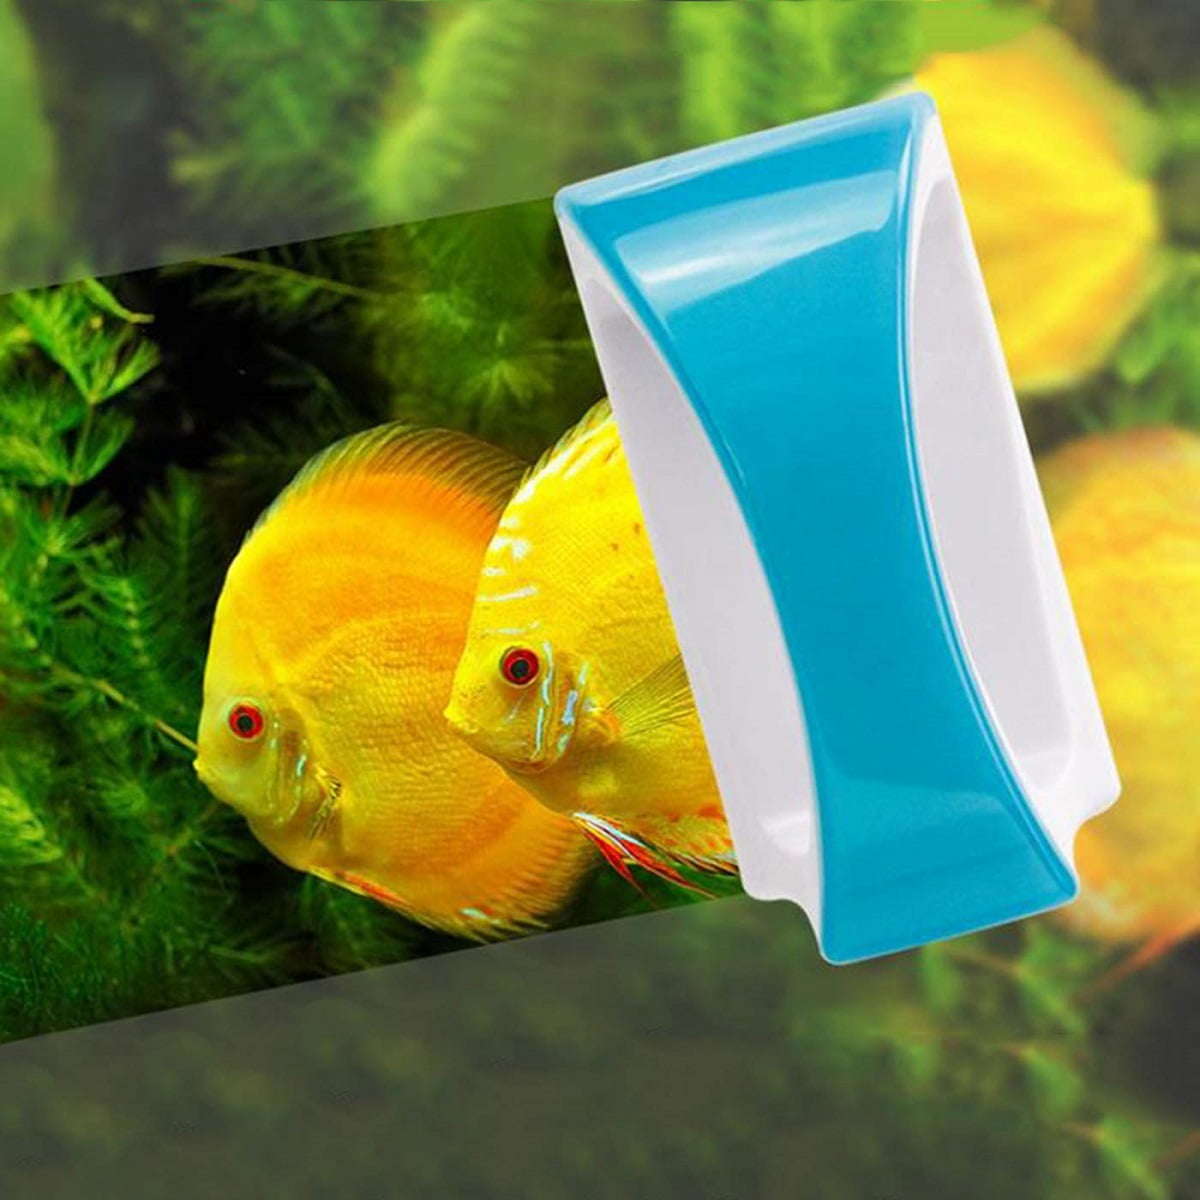 Aquarium Glass Cleaner Brush,Magnetic Algae Scraper Scrubber Clean Brush Tool for Glass Fish Tank Cleaning 